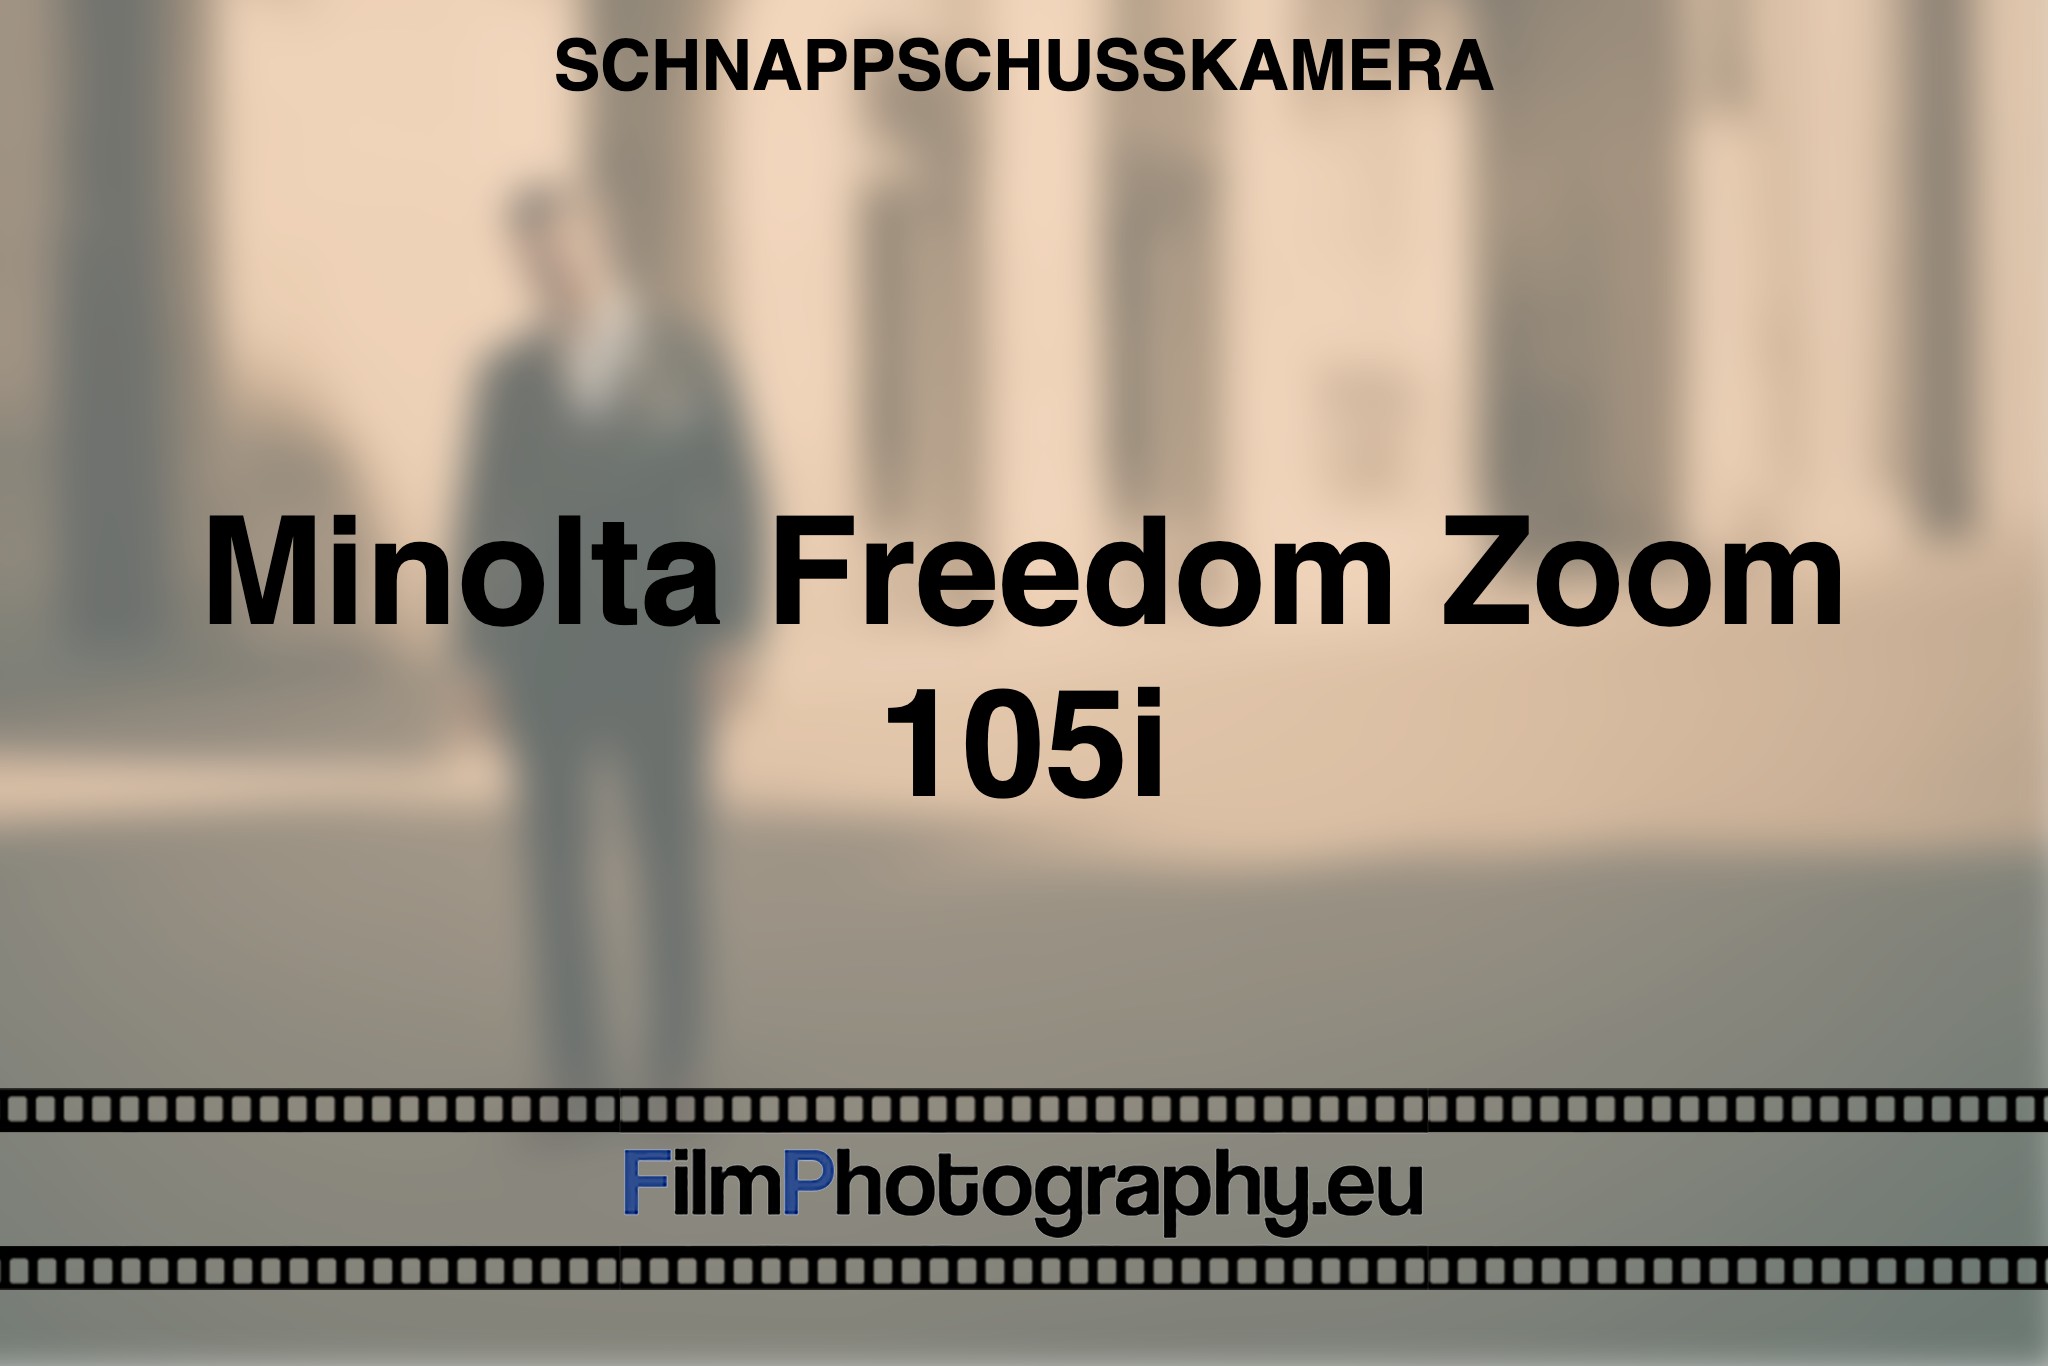 minolta-freedom-zoom-105i-schnappschusskamera-bnv